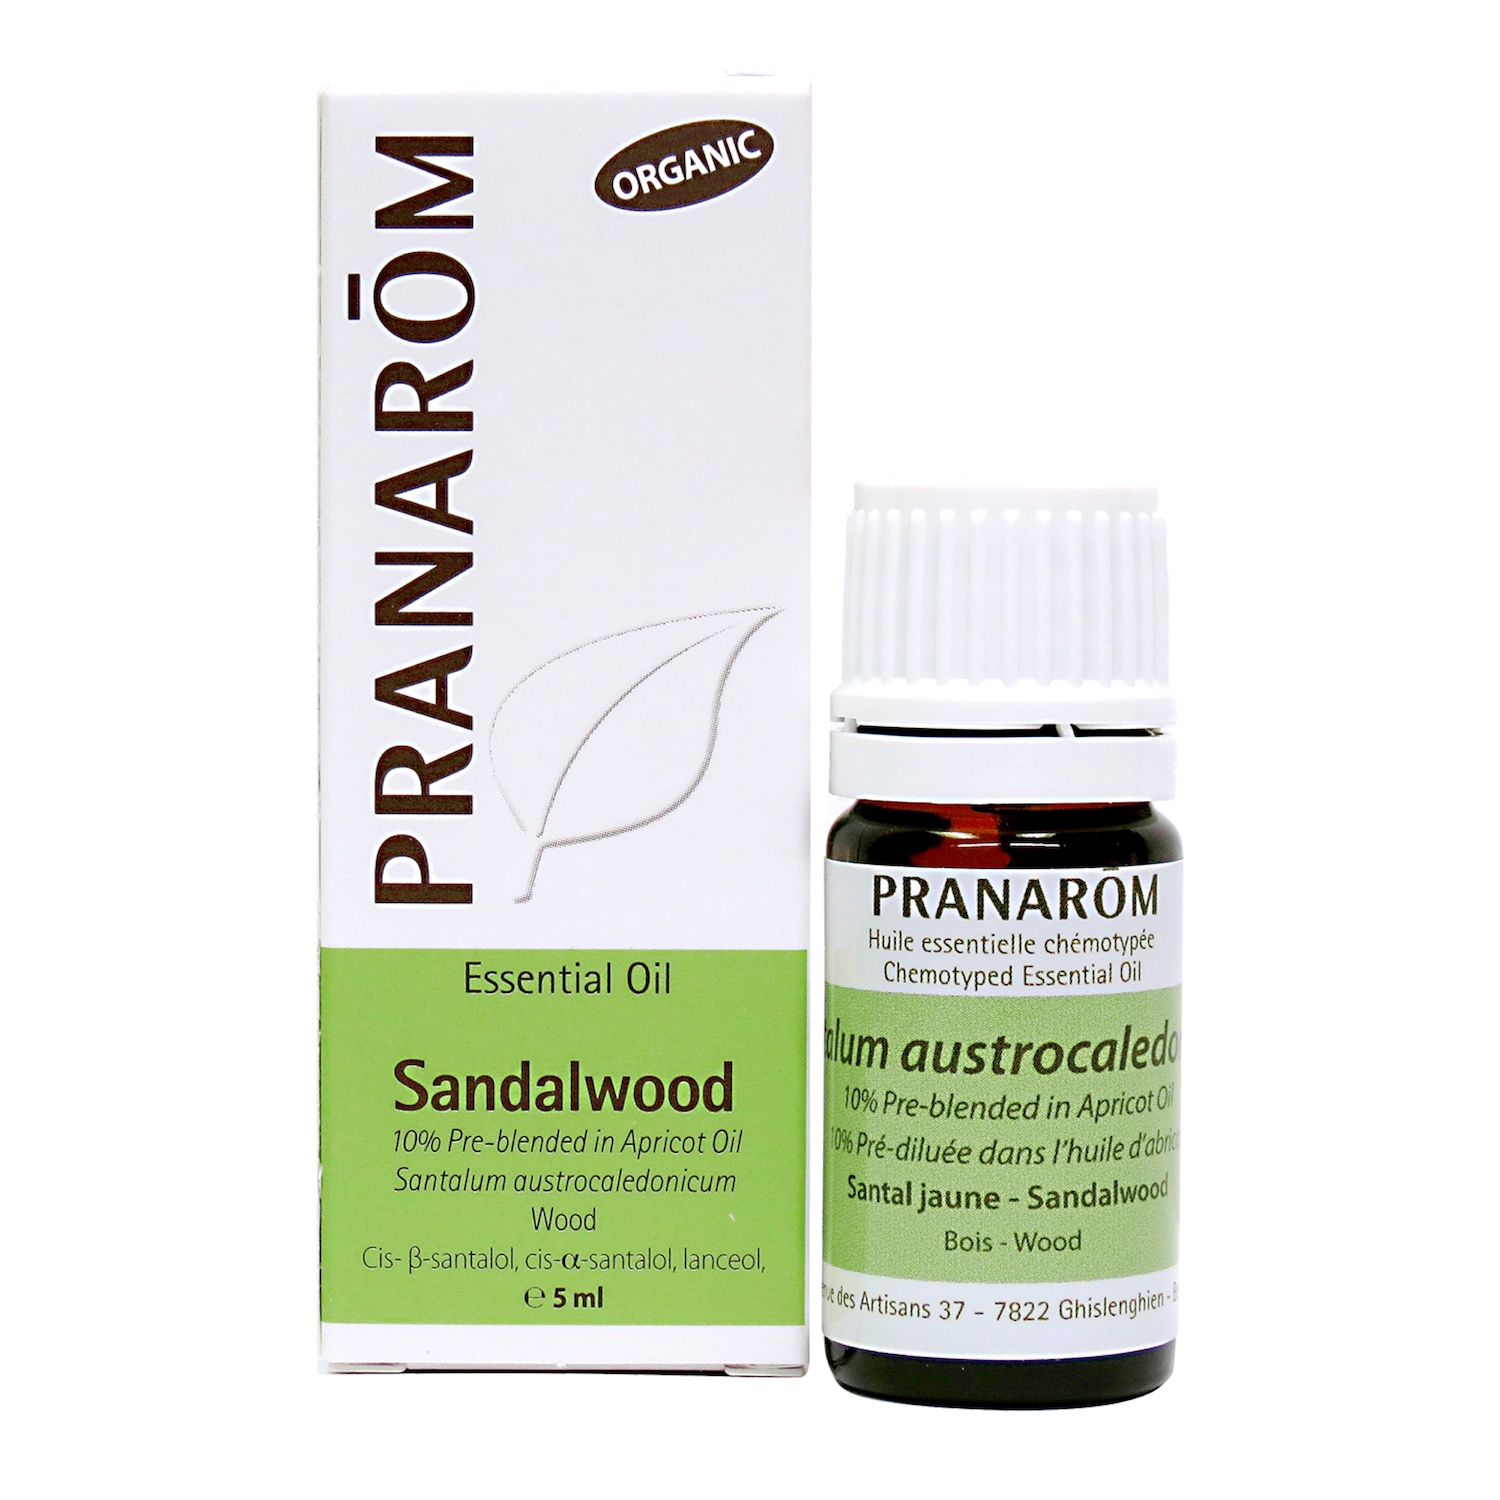 Sandalwood (10% pre-blended) Essential Oil